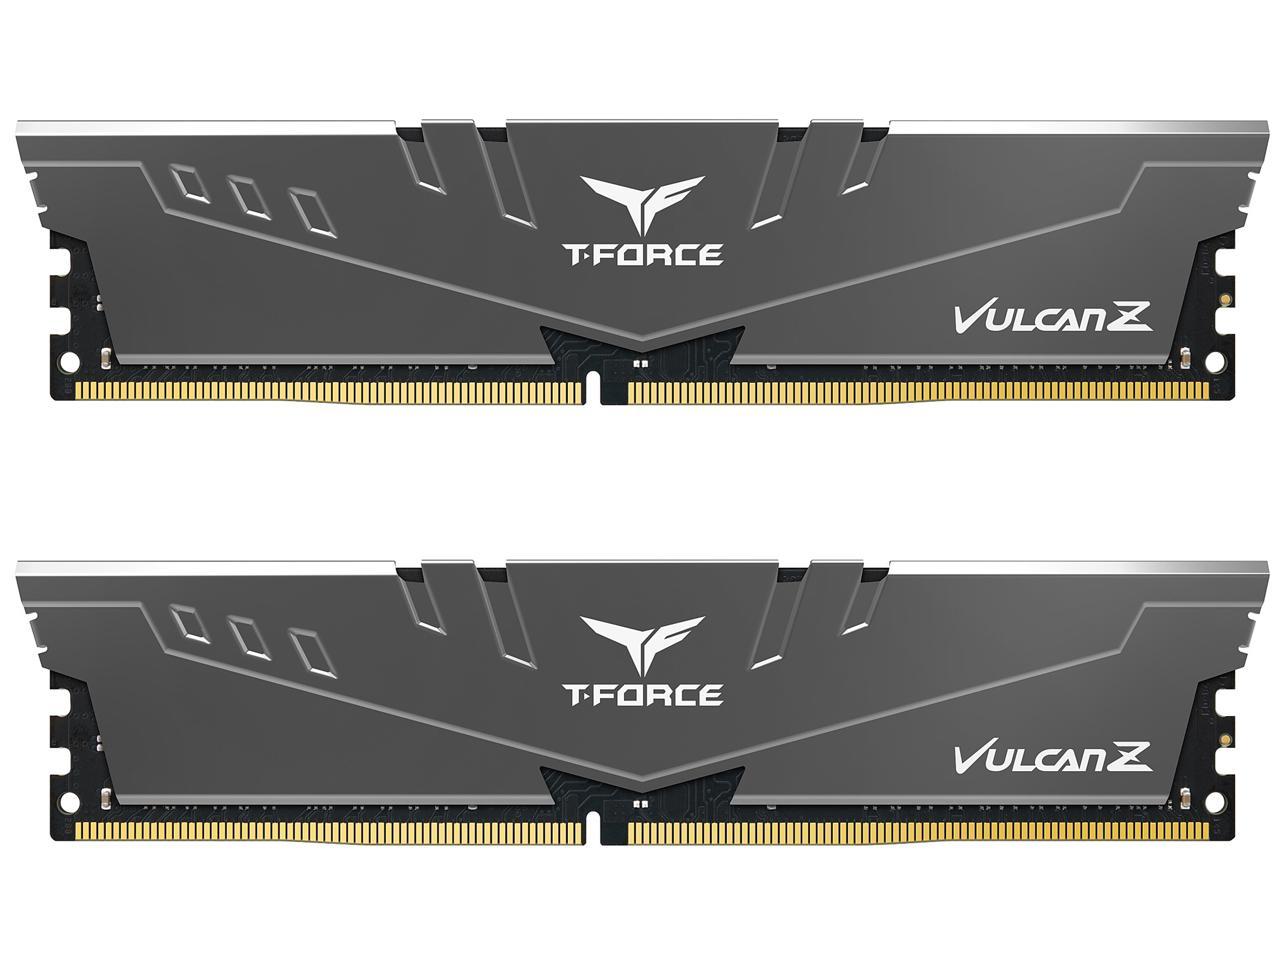 32GB (2x 16) Team T-FORCE VULCAN Z DDR4 3200 Desktop RAM kit + 16GB Memory Card $80 at Newegg